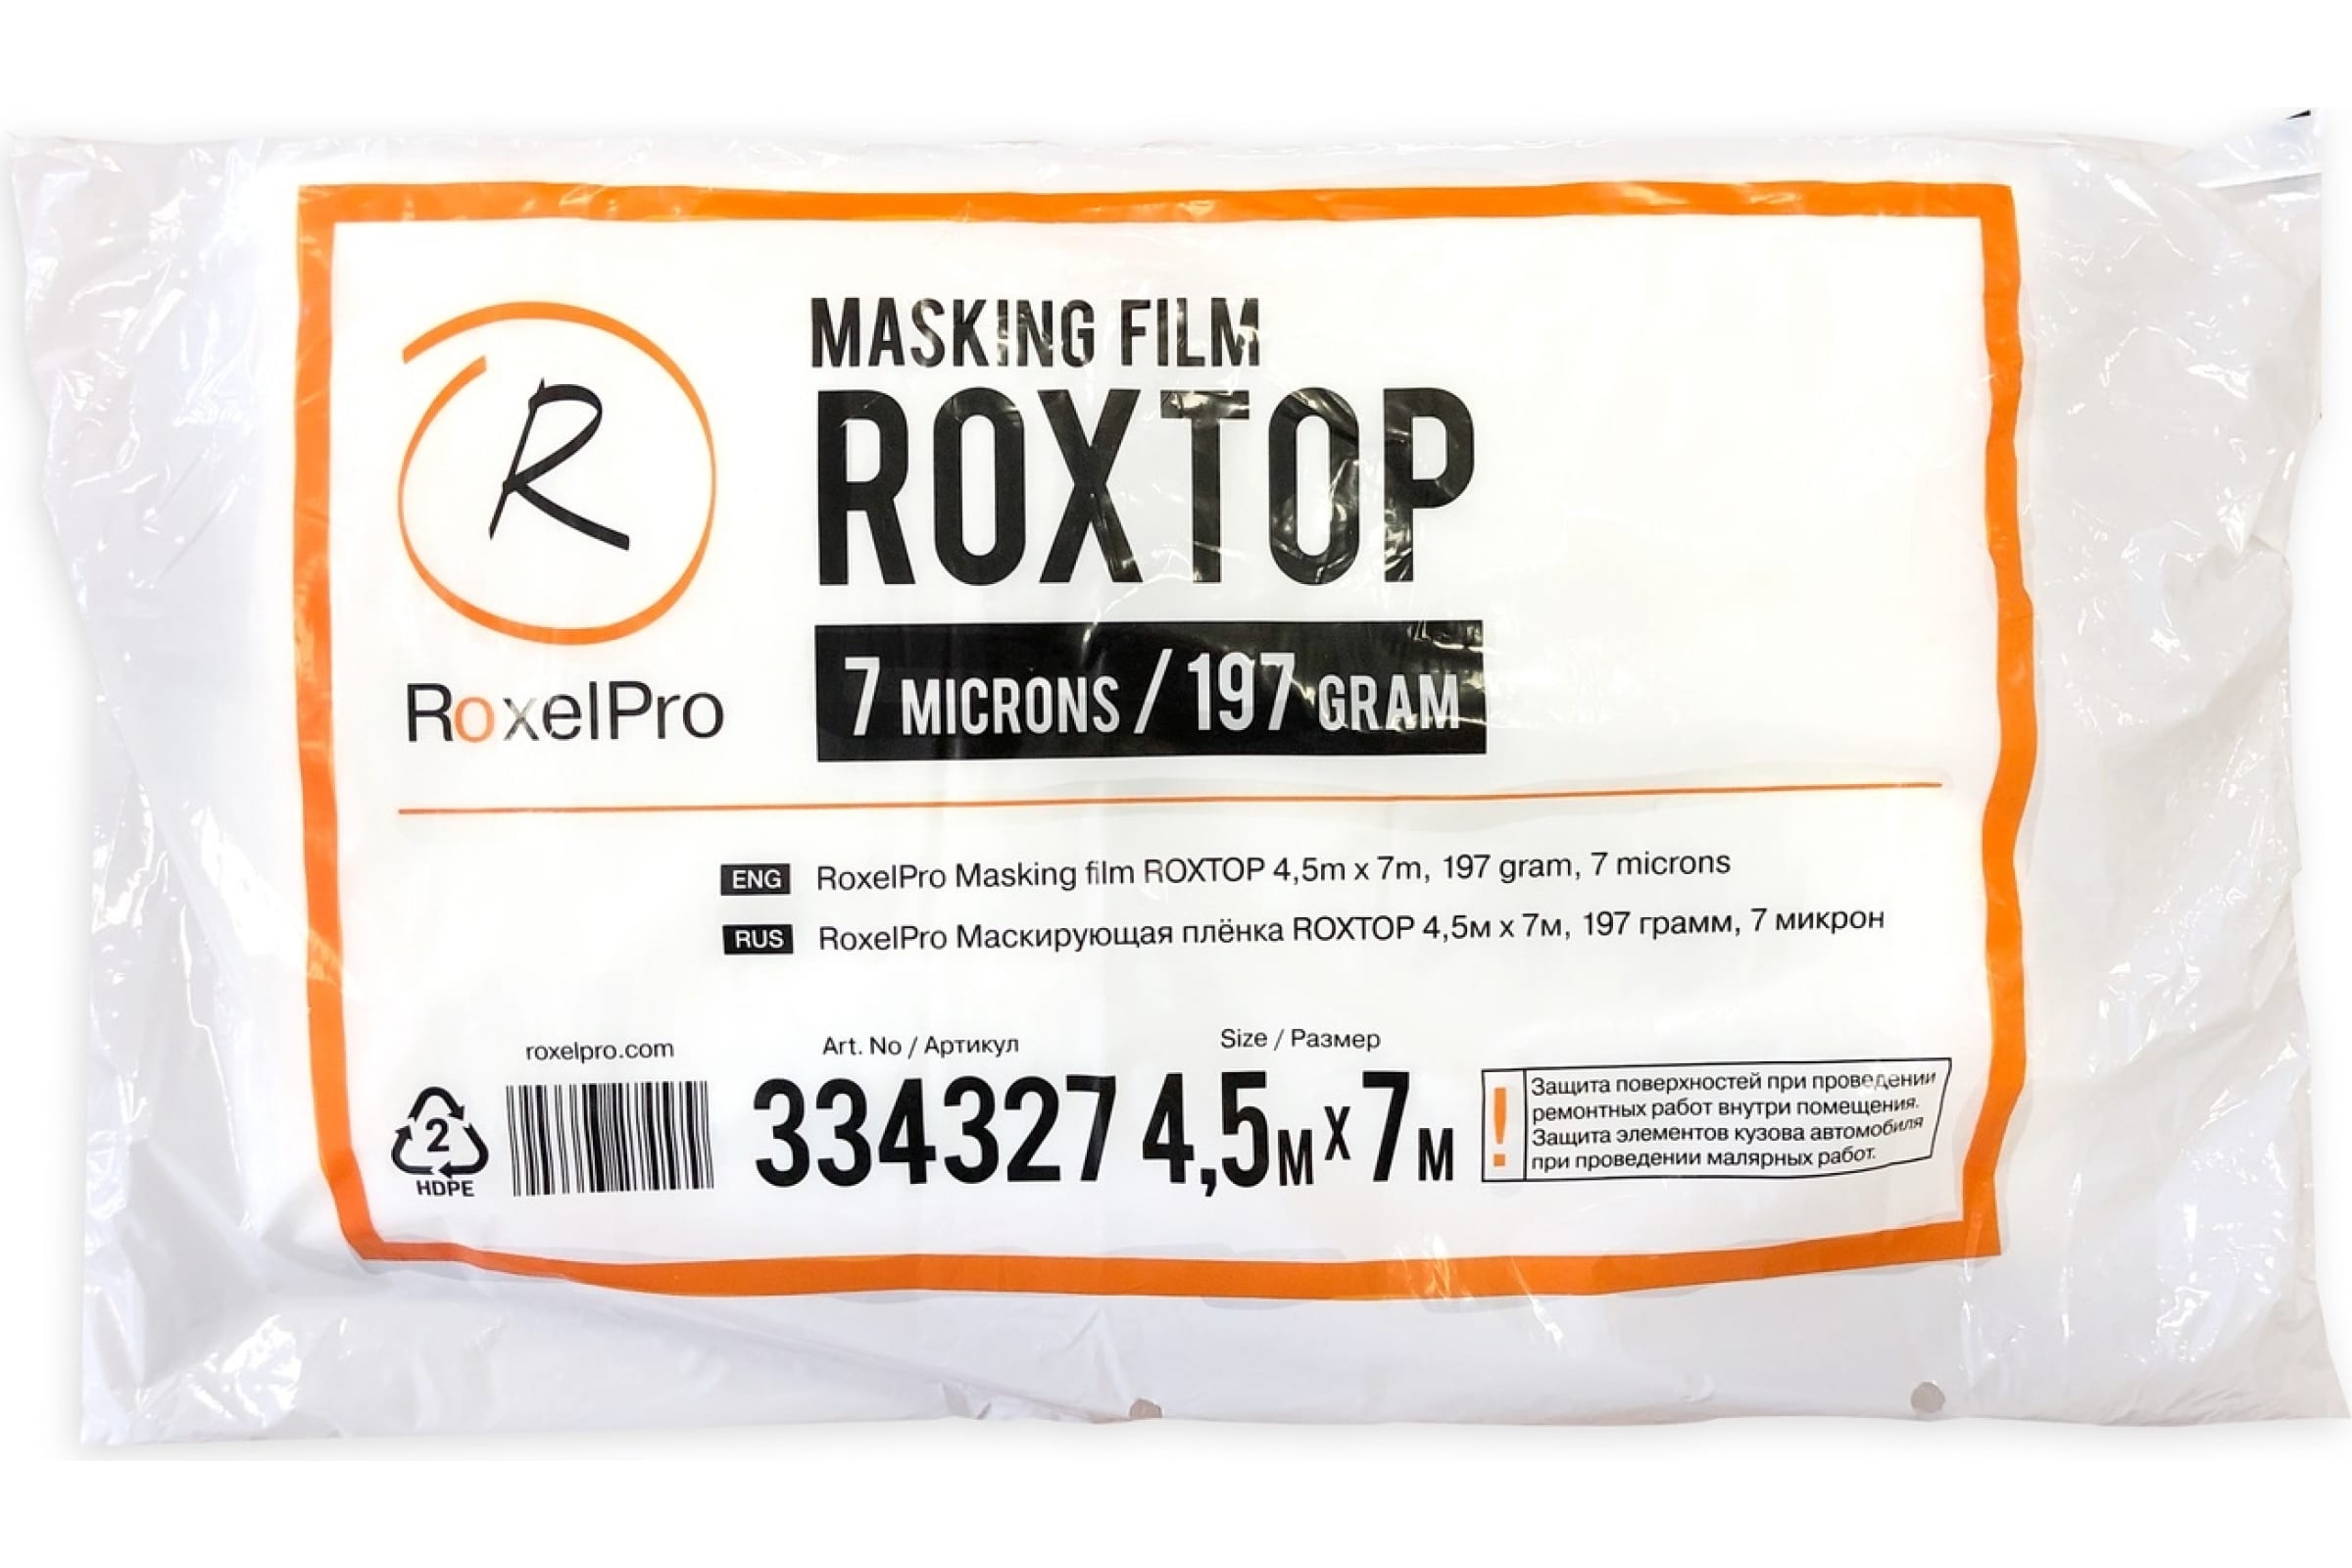 RoxelPro Маскирующая плёнка ROXTOP 4,5мх7м, 197 г, 7 микрон, 334327